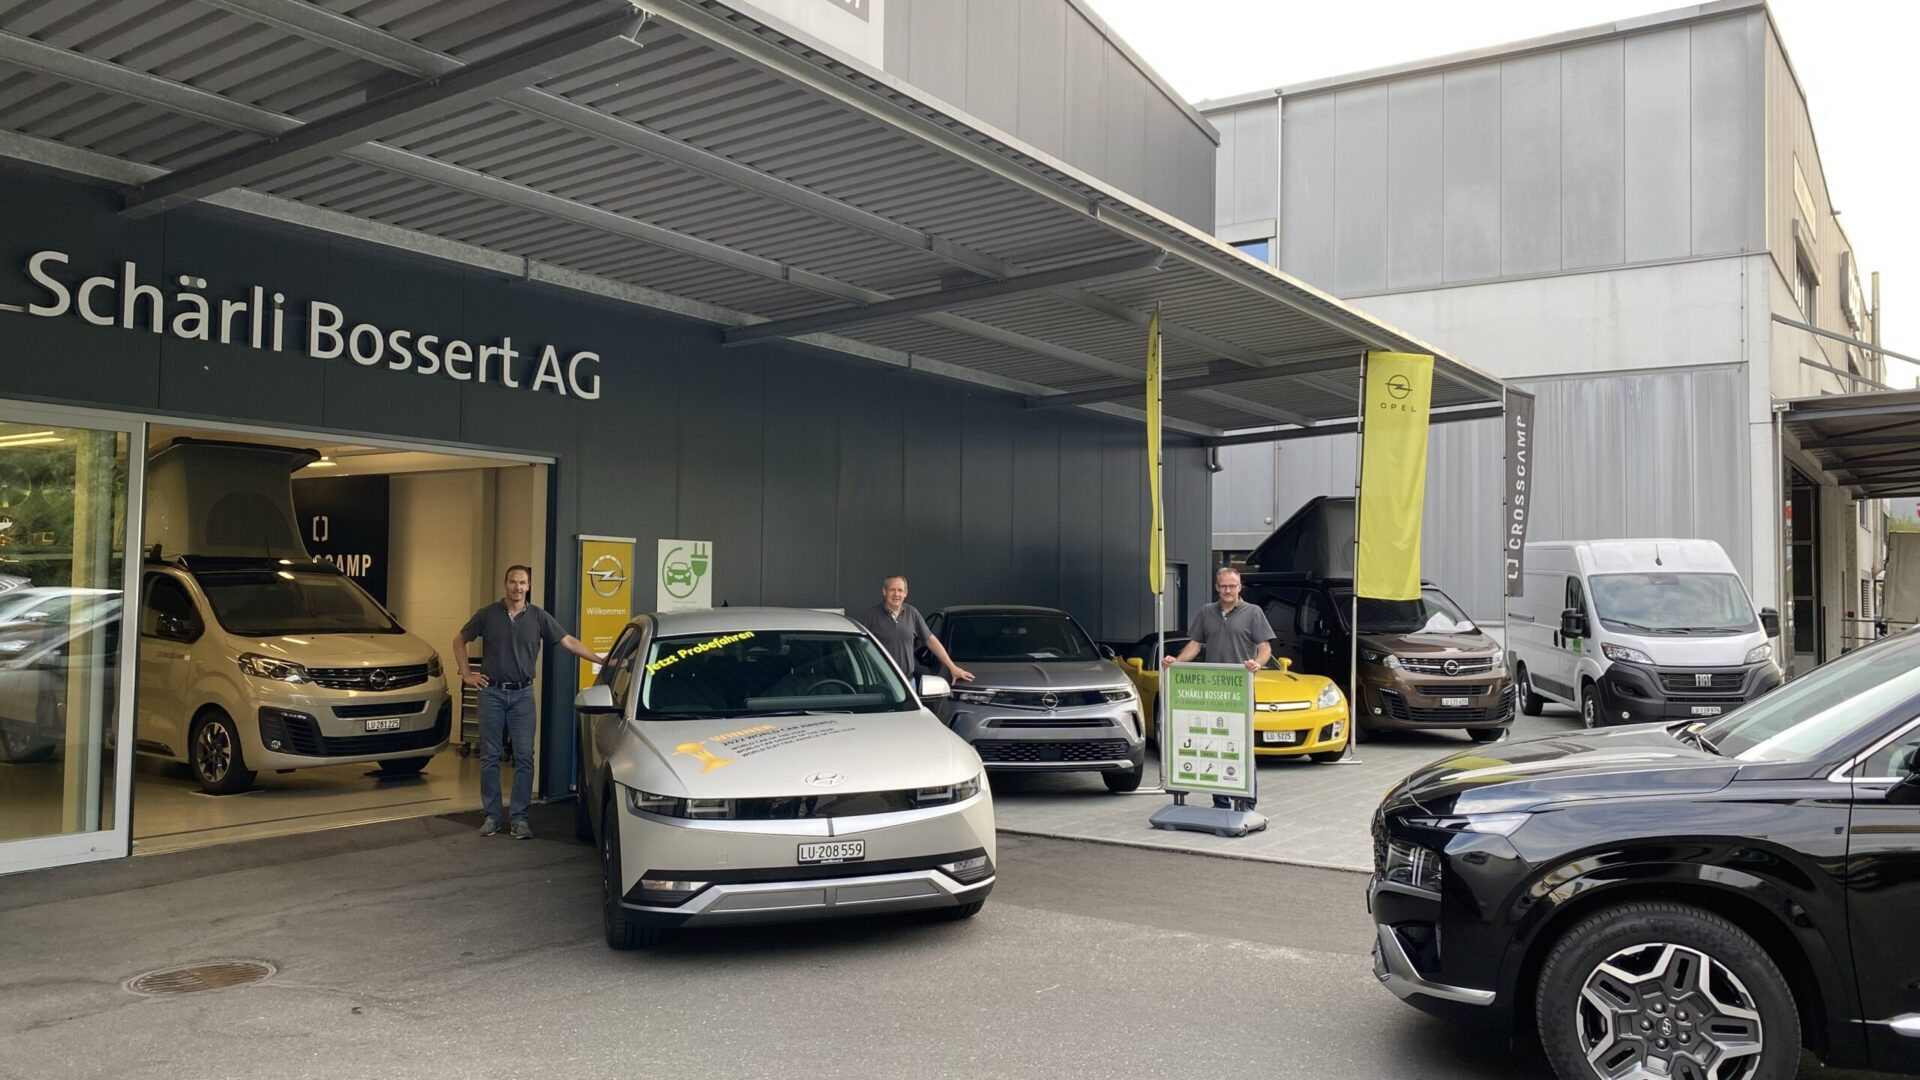 IMG E6128 BeratungsteamSchaerli Bossert AG Ist Bereit Kopie Scaled, Schärli Bossert AG